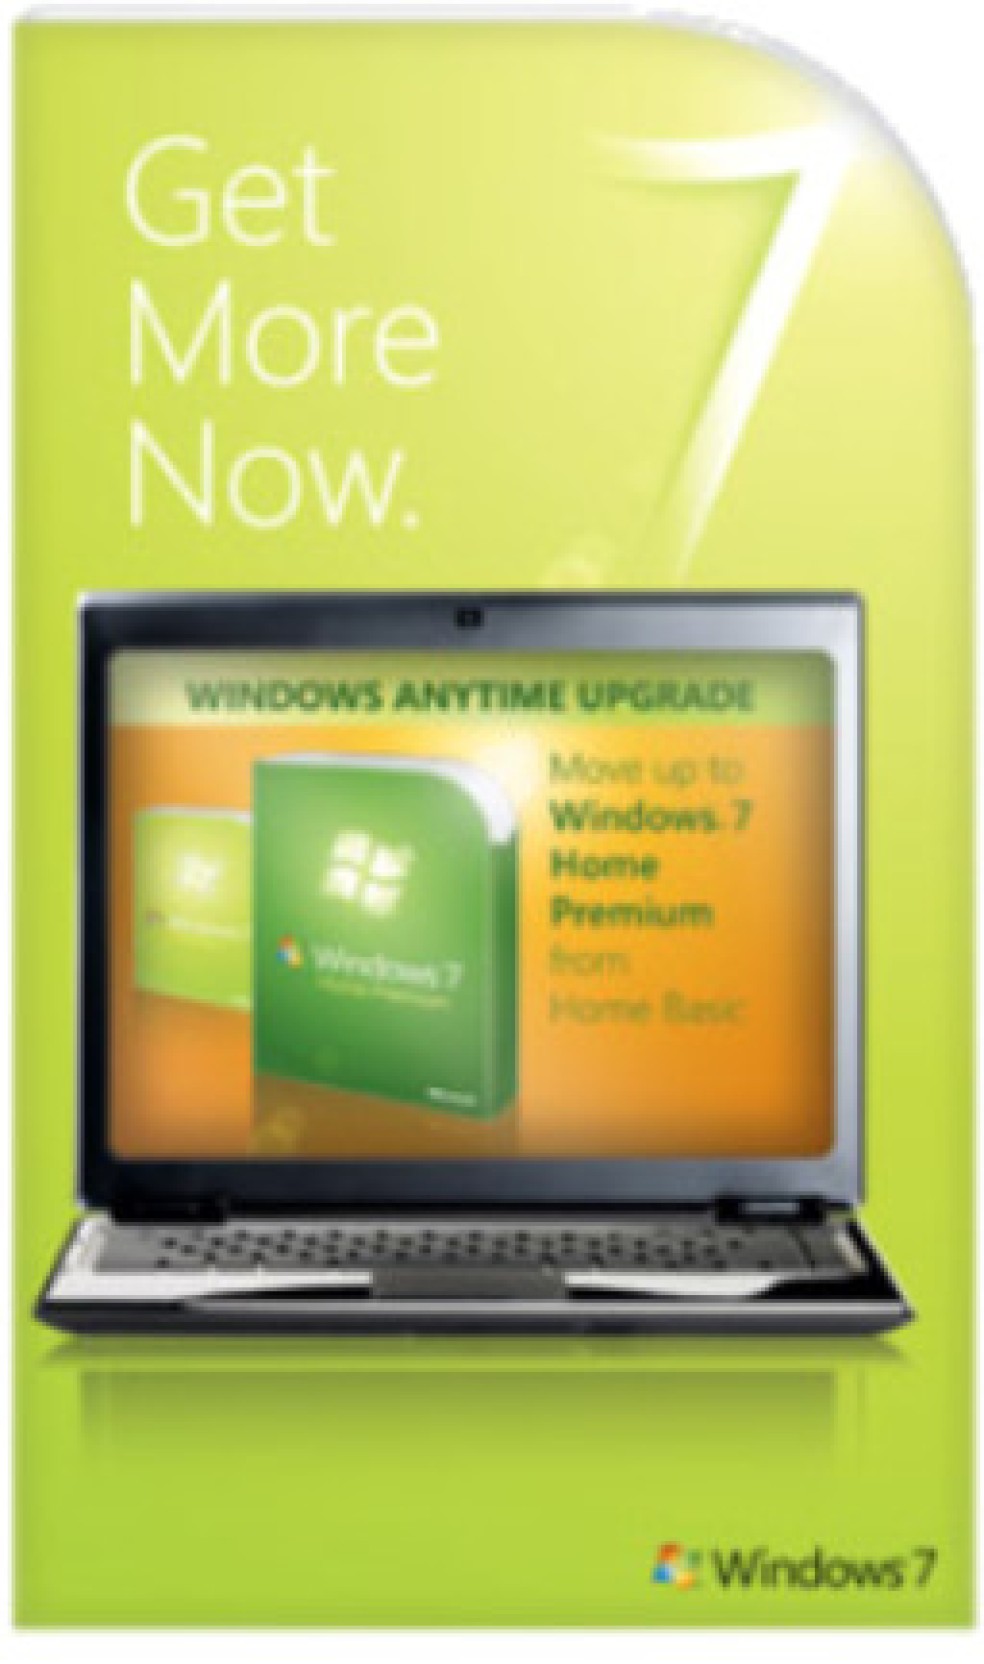 windows 7 home premium upgrade to windows 10